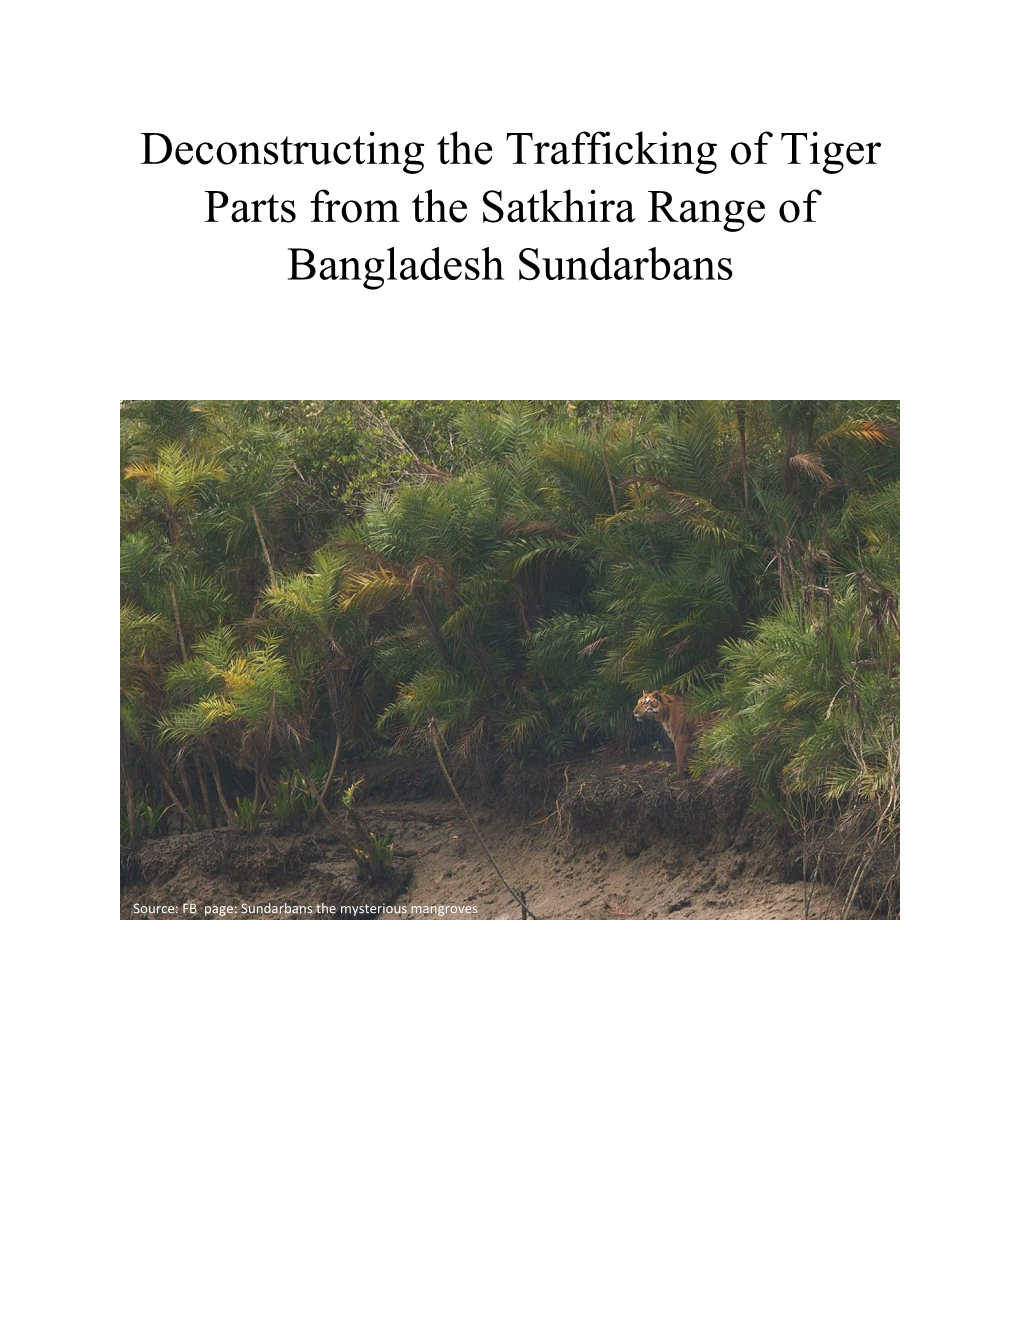 Deconstructing the Trafficking of Tiger Parts from the Satkhira Range of Bangladesh Sundarbans